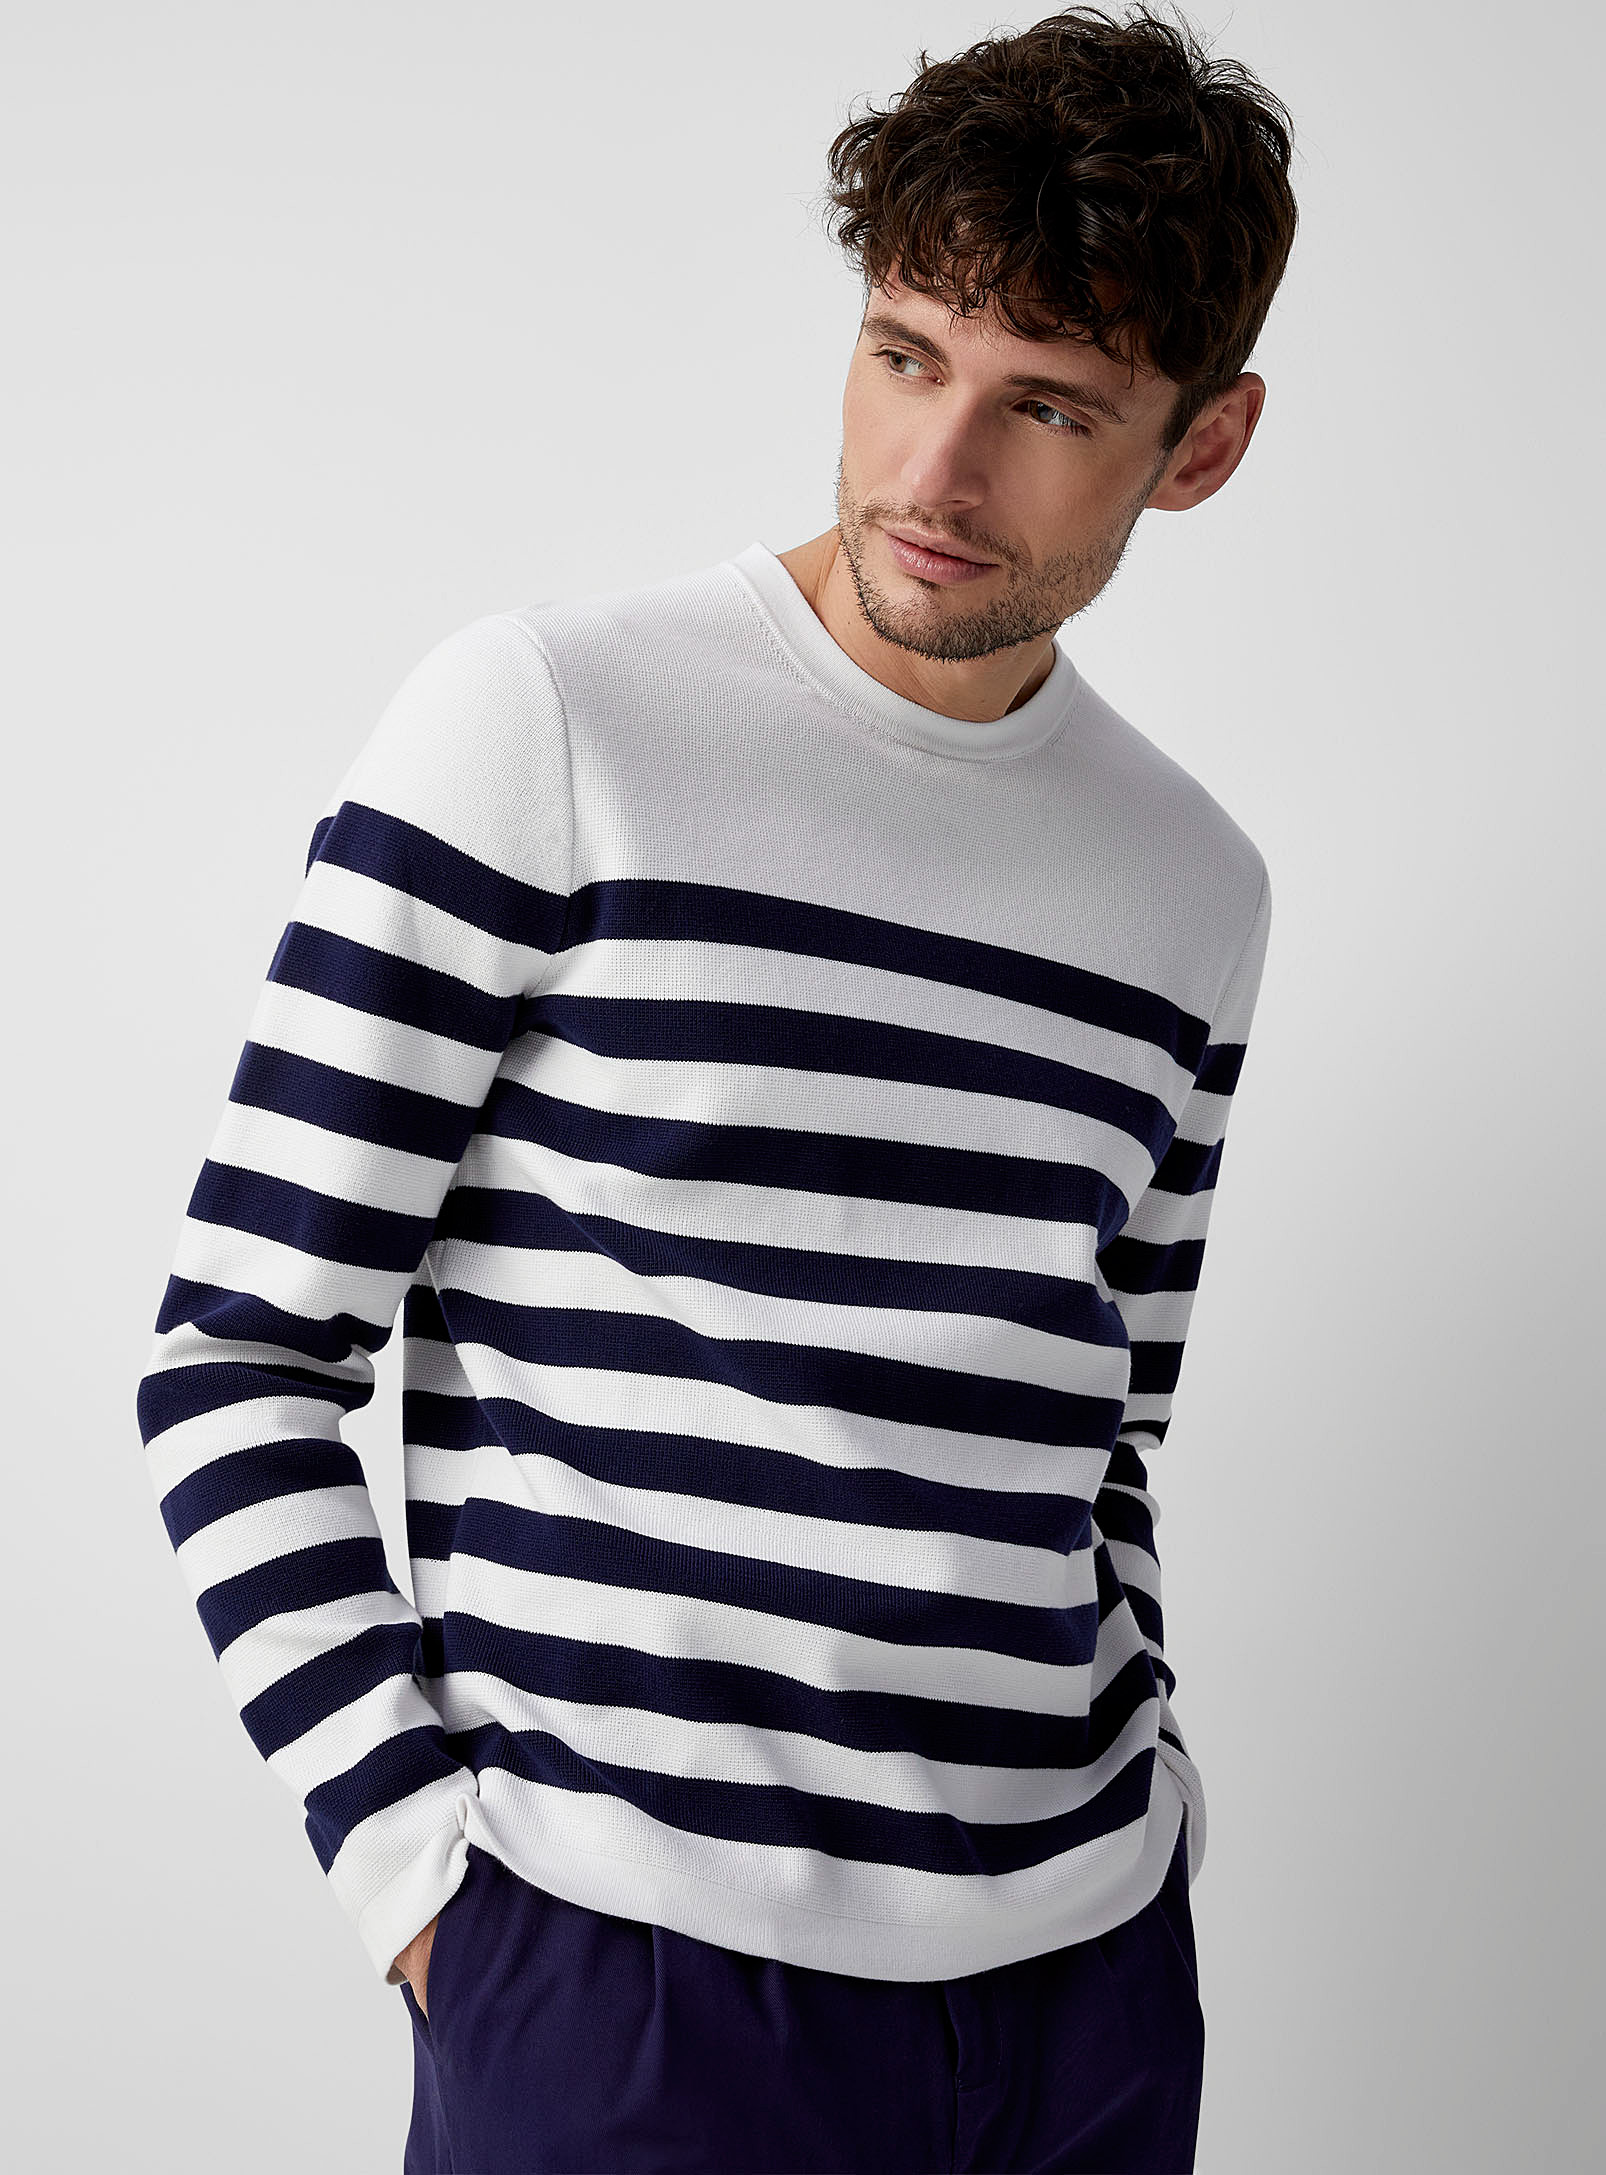 Michael Kors - Men's Coastal stripe sweater